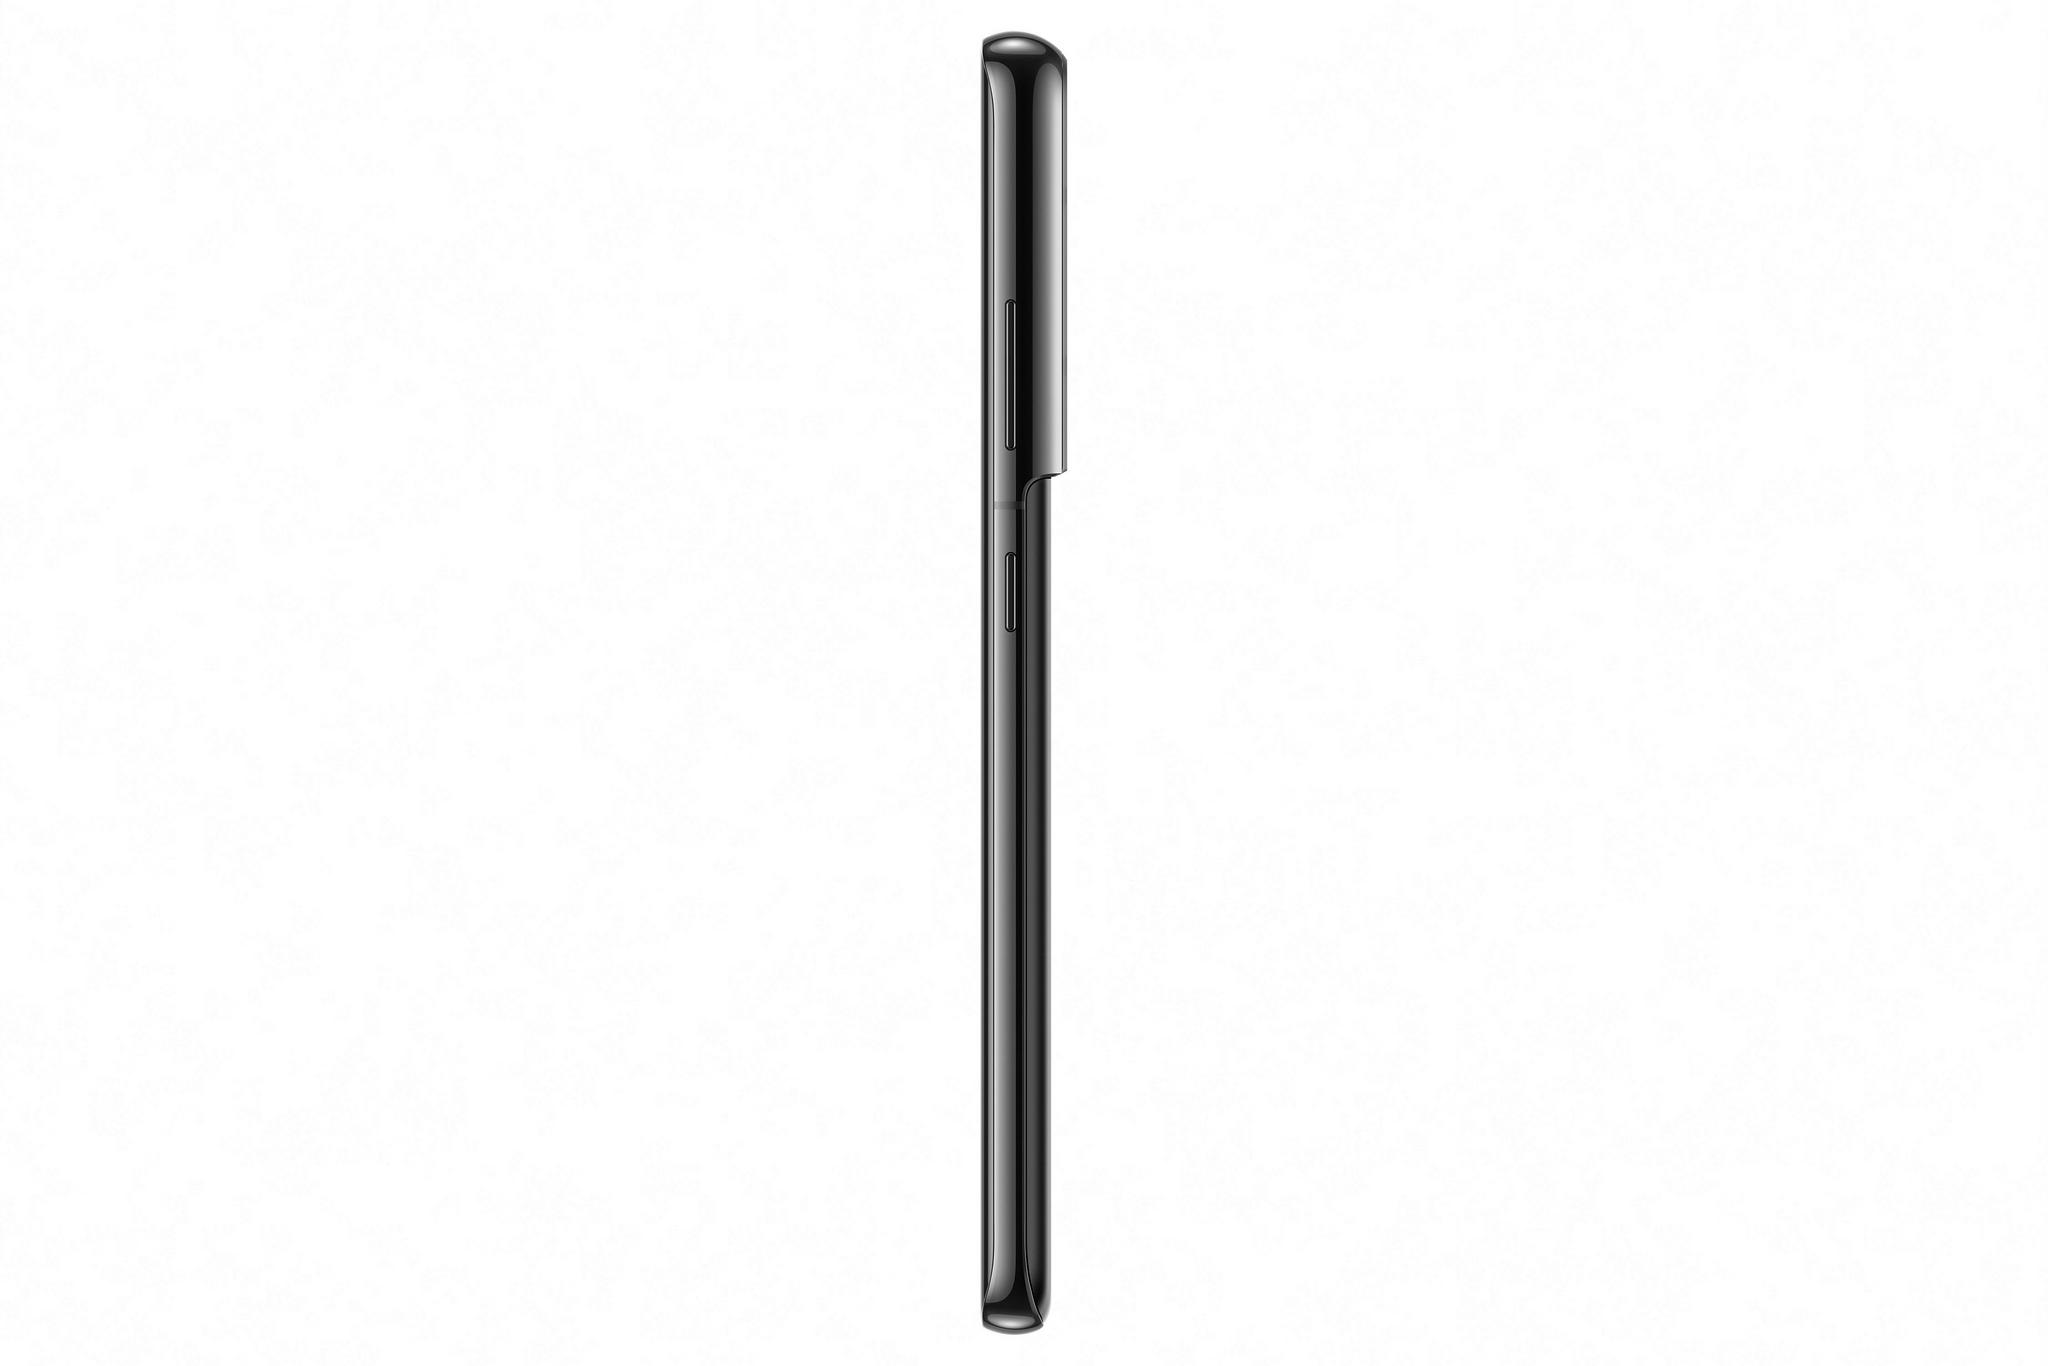 Samsung Galaxy S21 Ultra, 6.8-inch, 256GB, 12GB RAM, 5G - Black